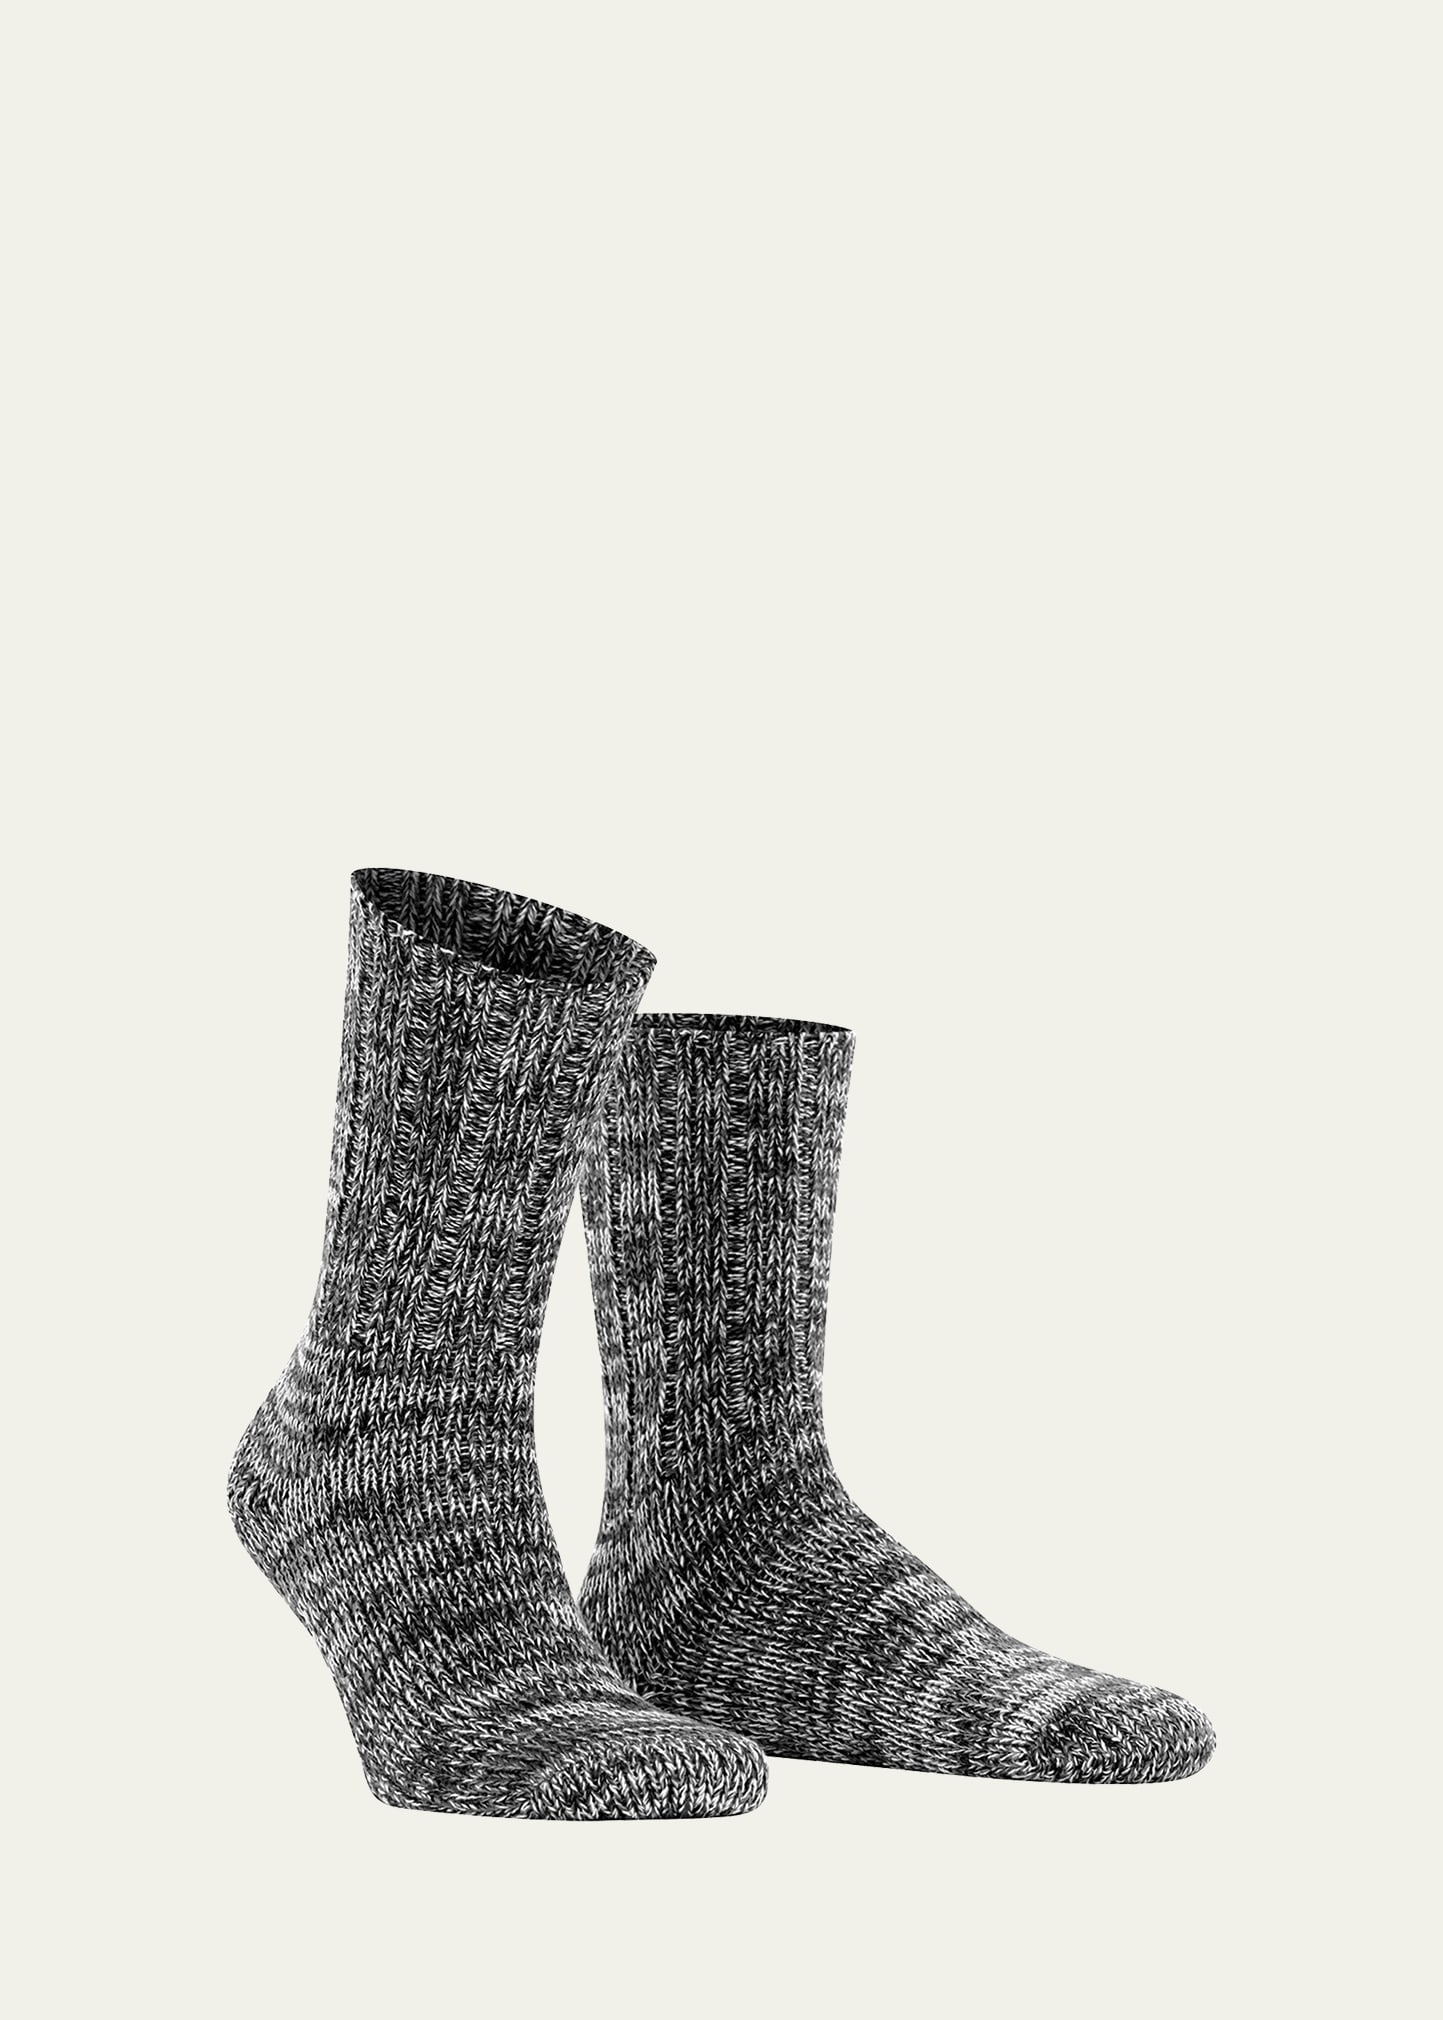 Falke Men's Brooklyn Rib-knit Cotton Socks In Black